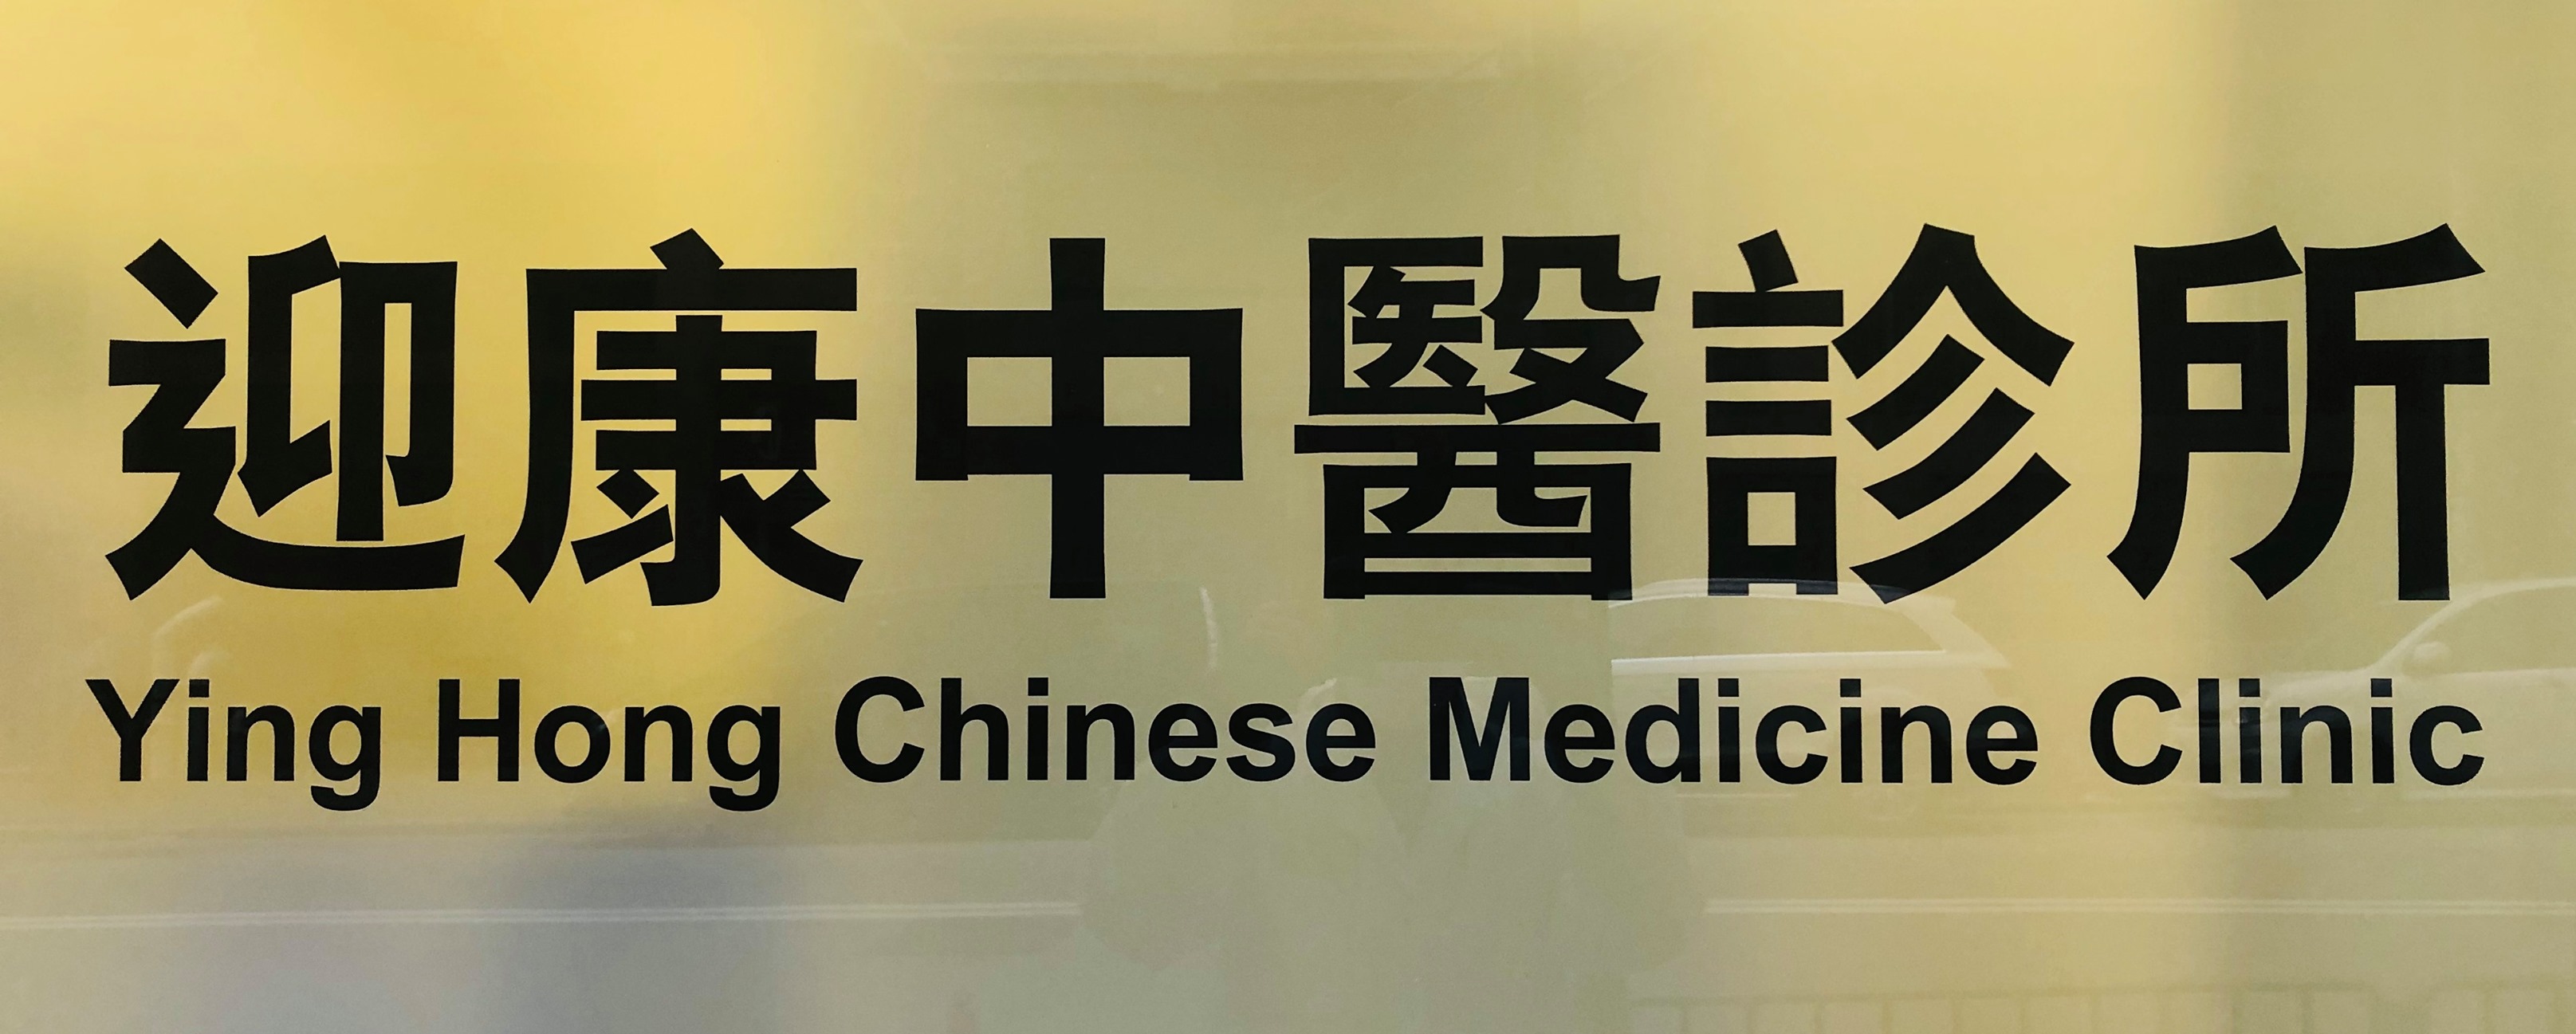 Chinese Medicine Practitioner: 李俊偉